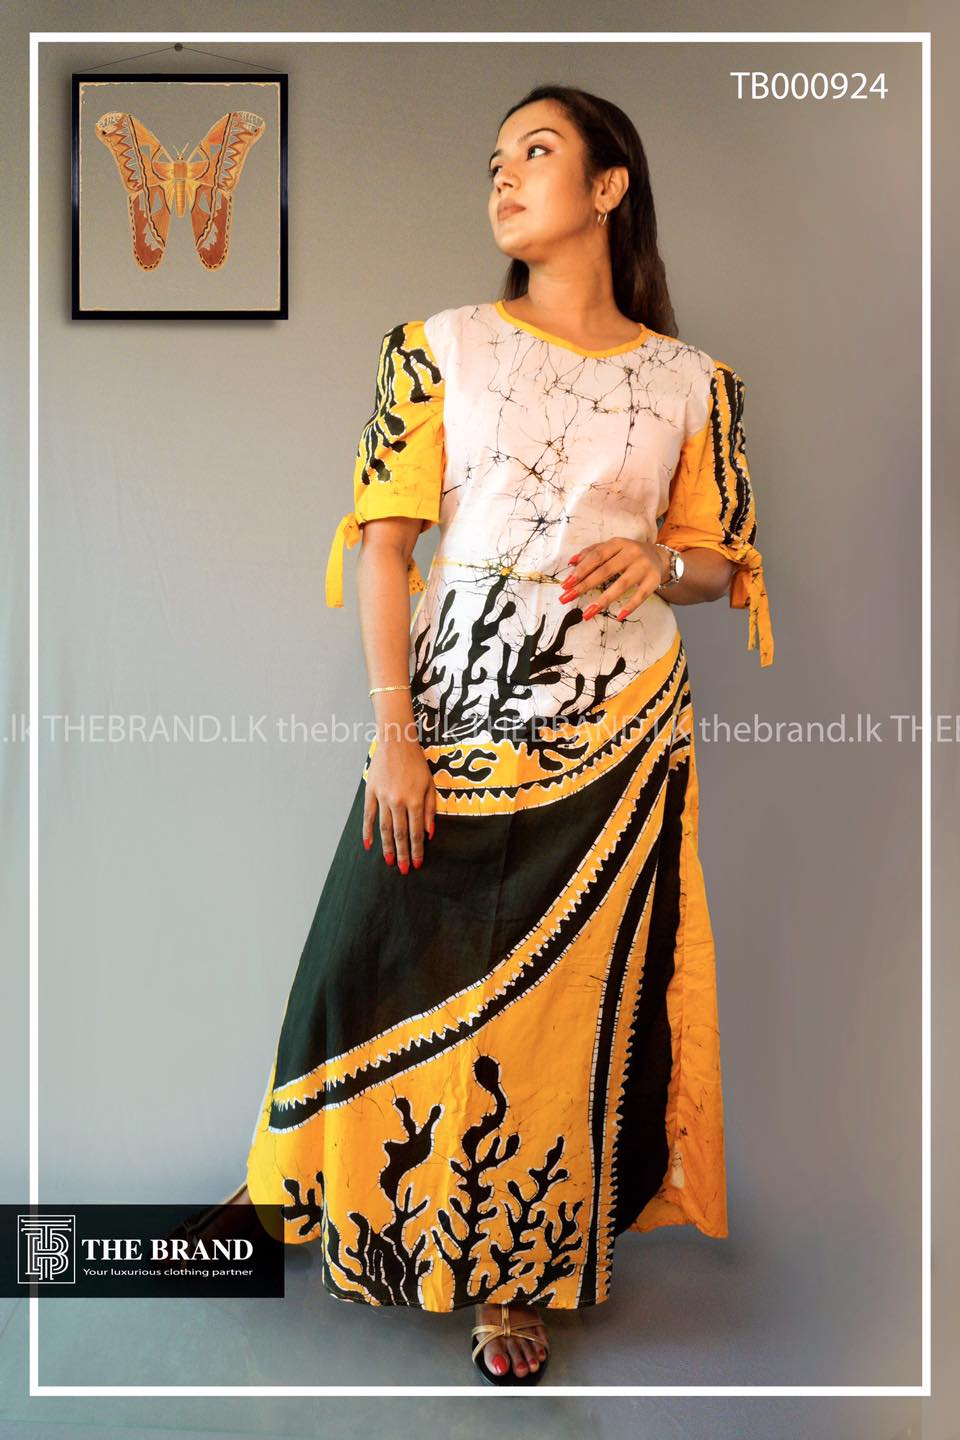 The brand batik dress